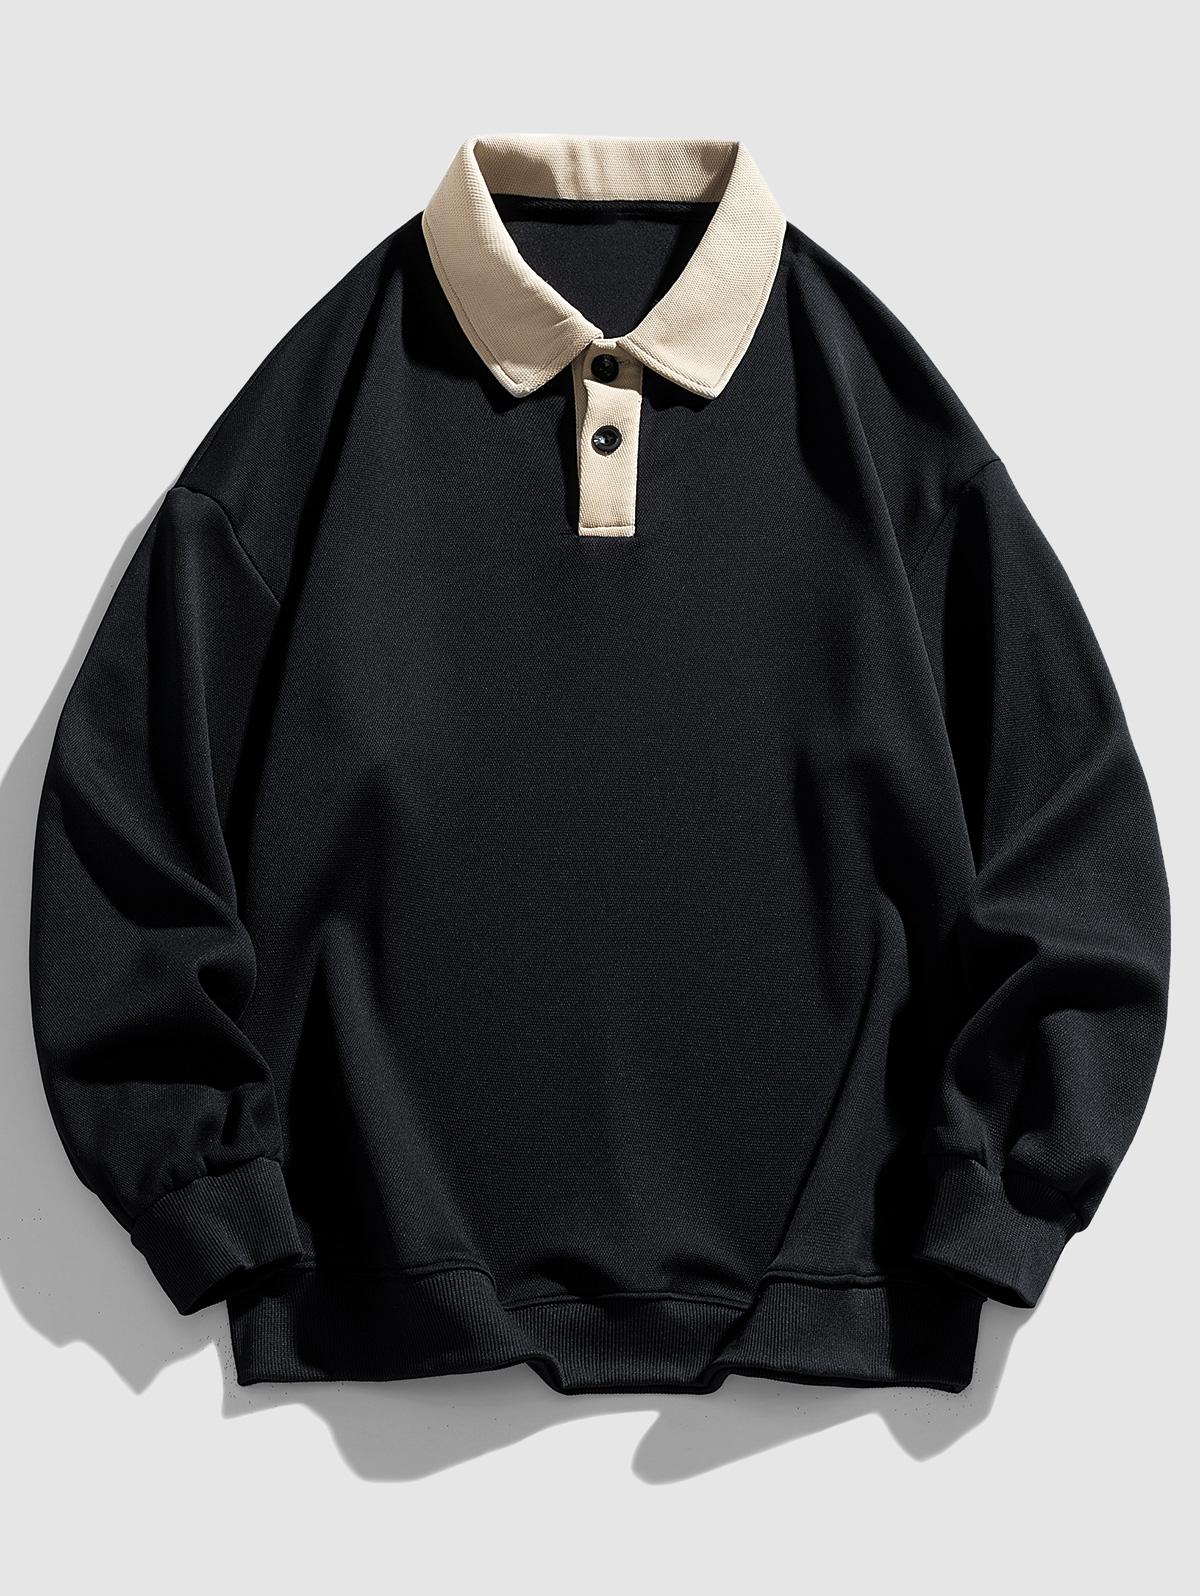 ZAFUL Men's Color Spliced Polo Collar Sweatshirt S Black